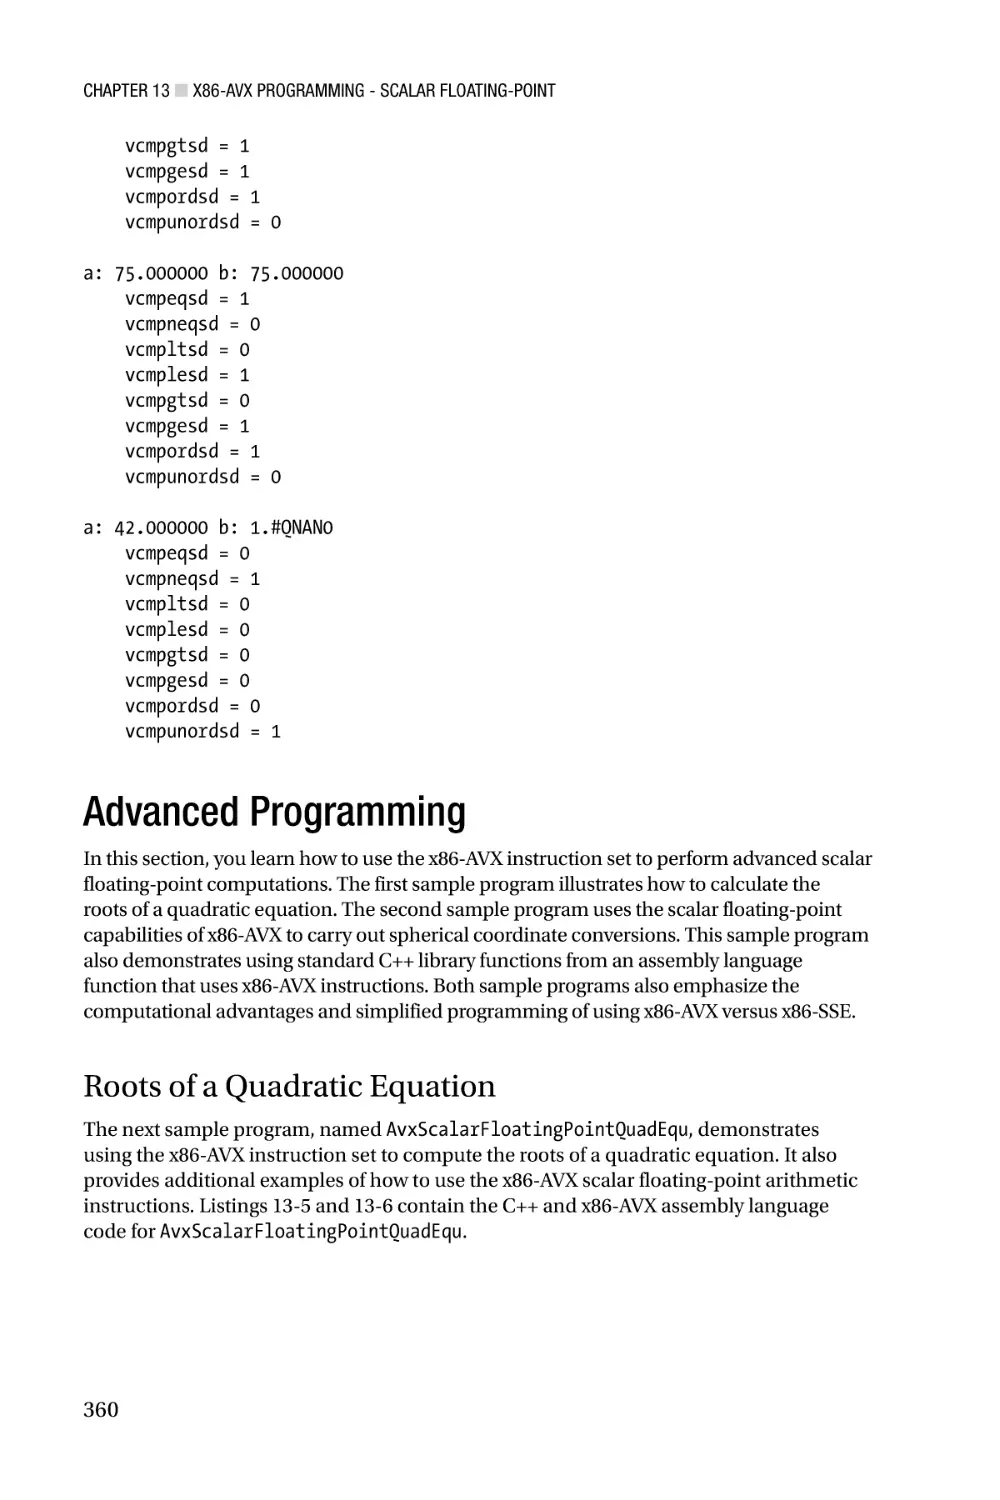 Advanced Programming
Roots of a Quadratic Equation